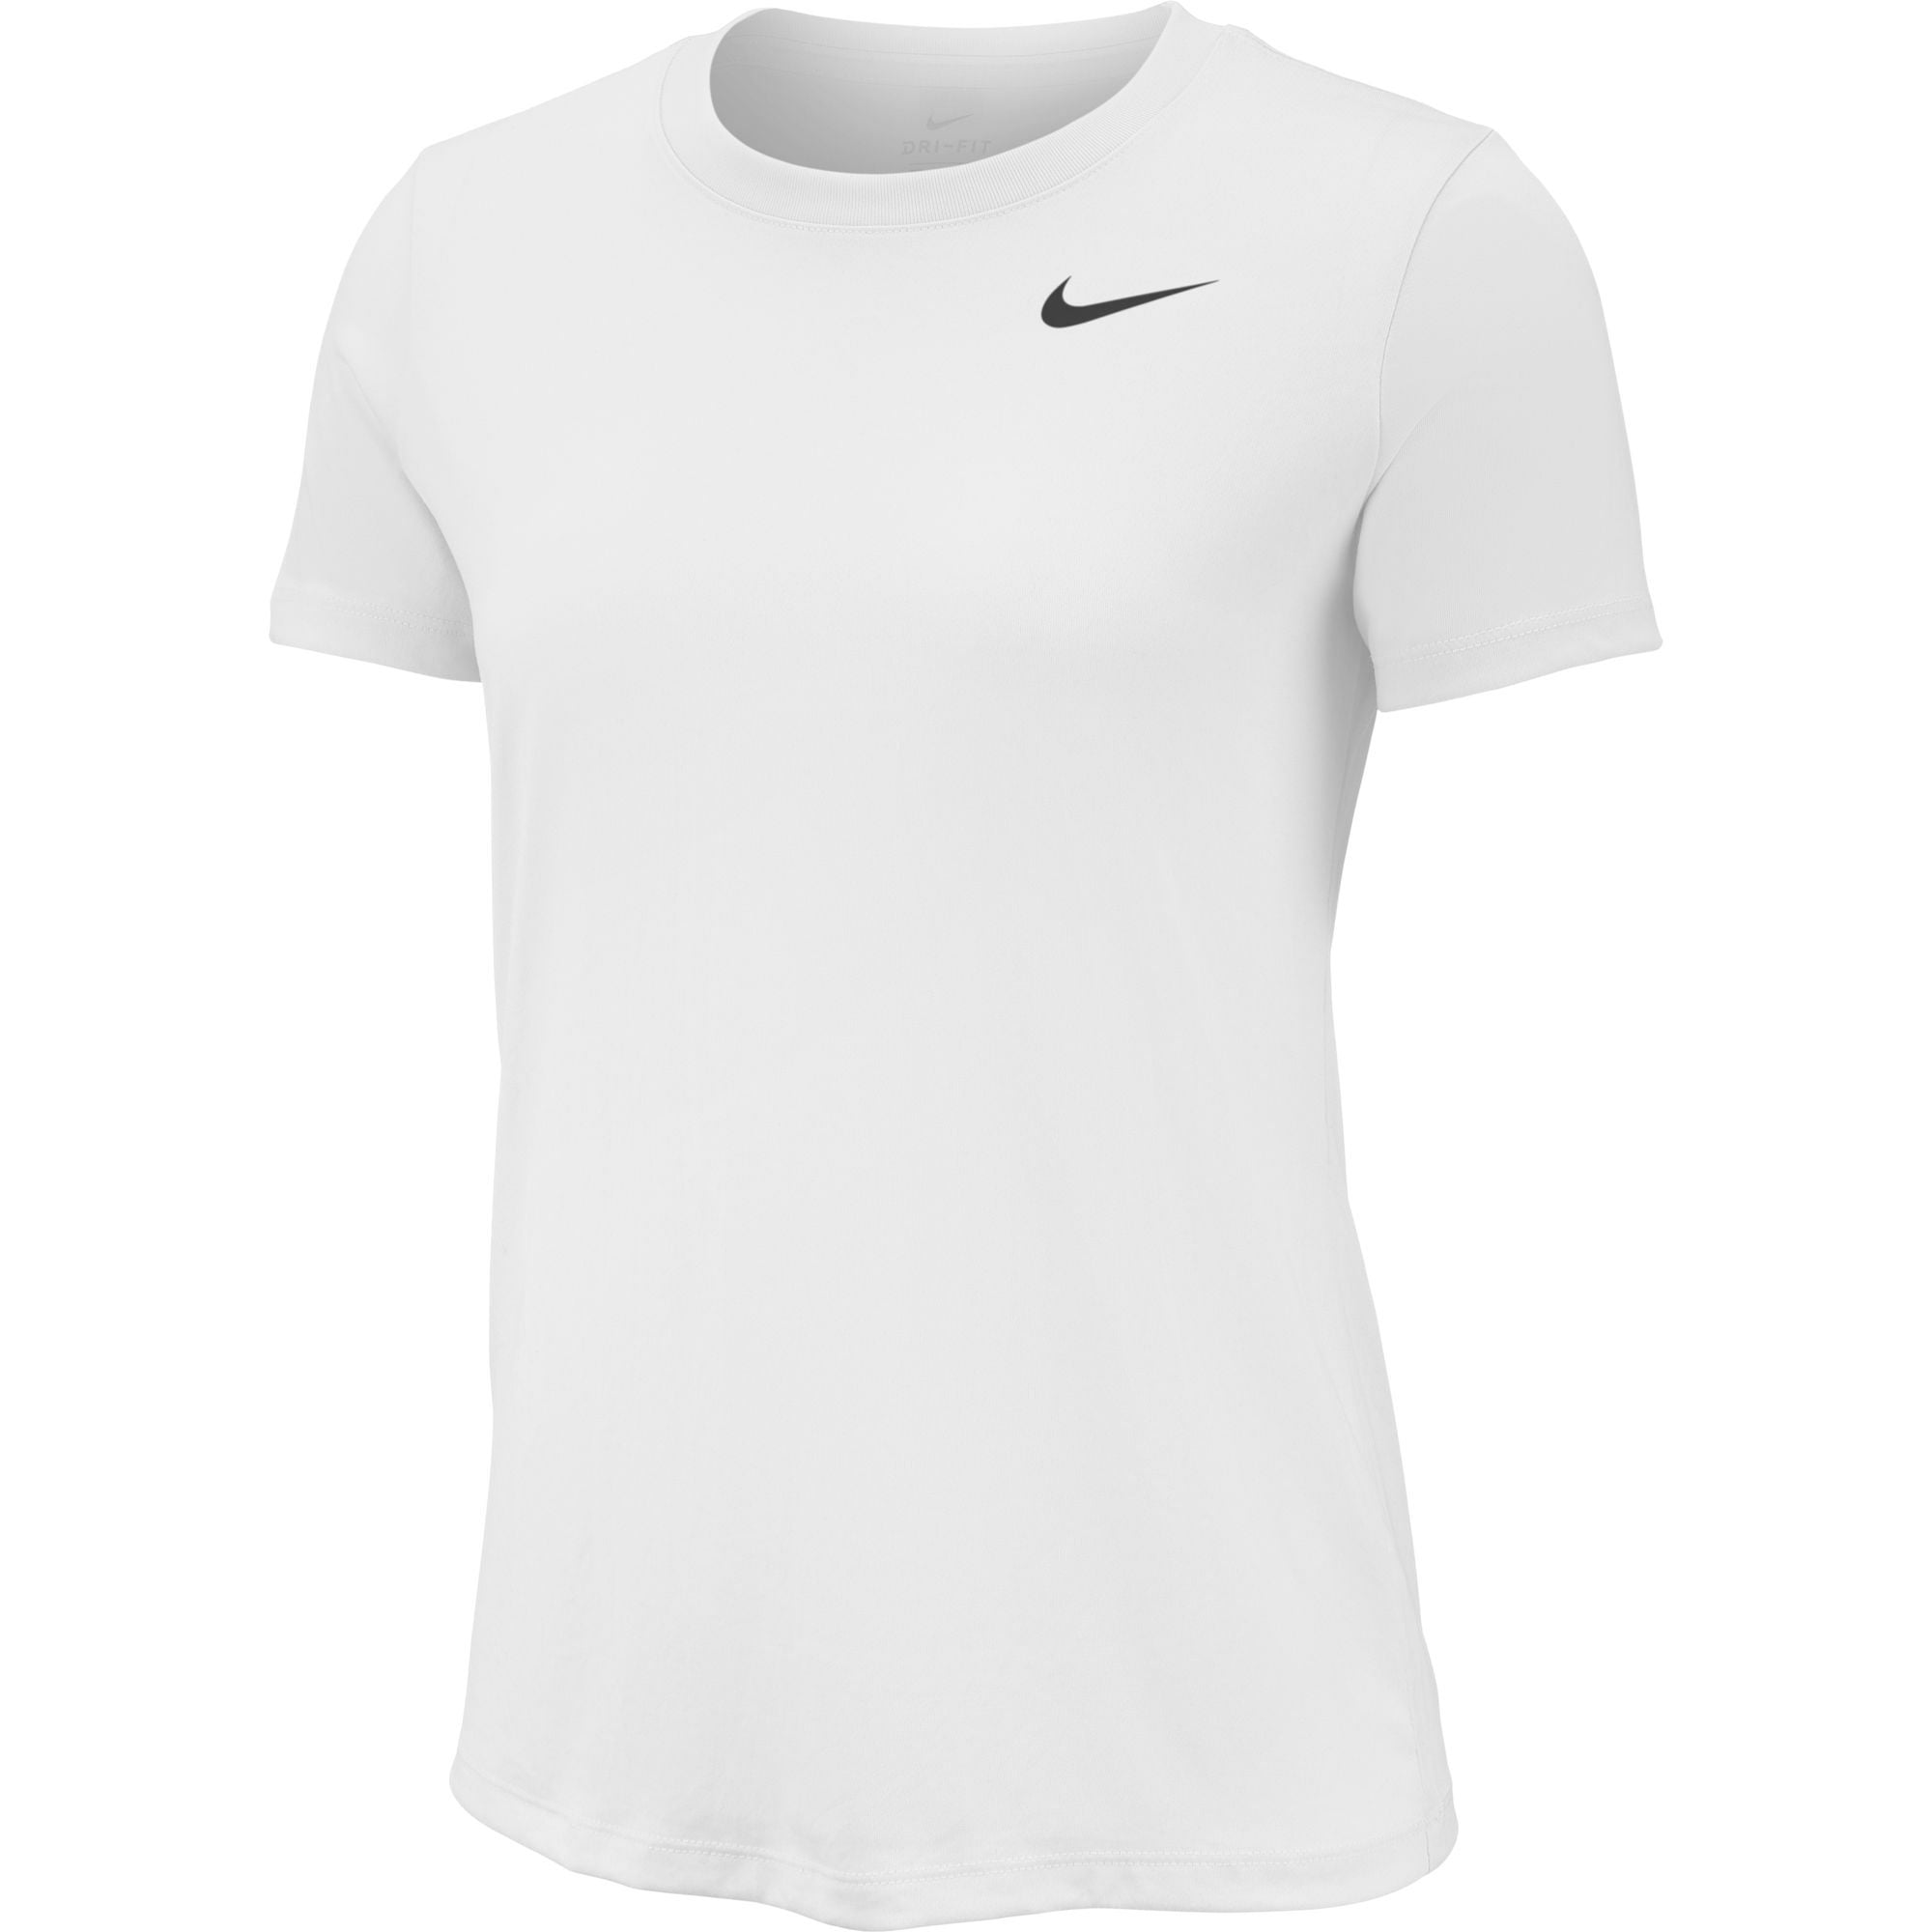 Nike - Nike Women's Dry Legend T-Shirt - Walmart.com - Walmart.com